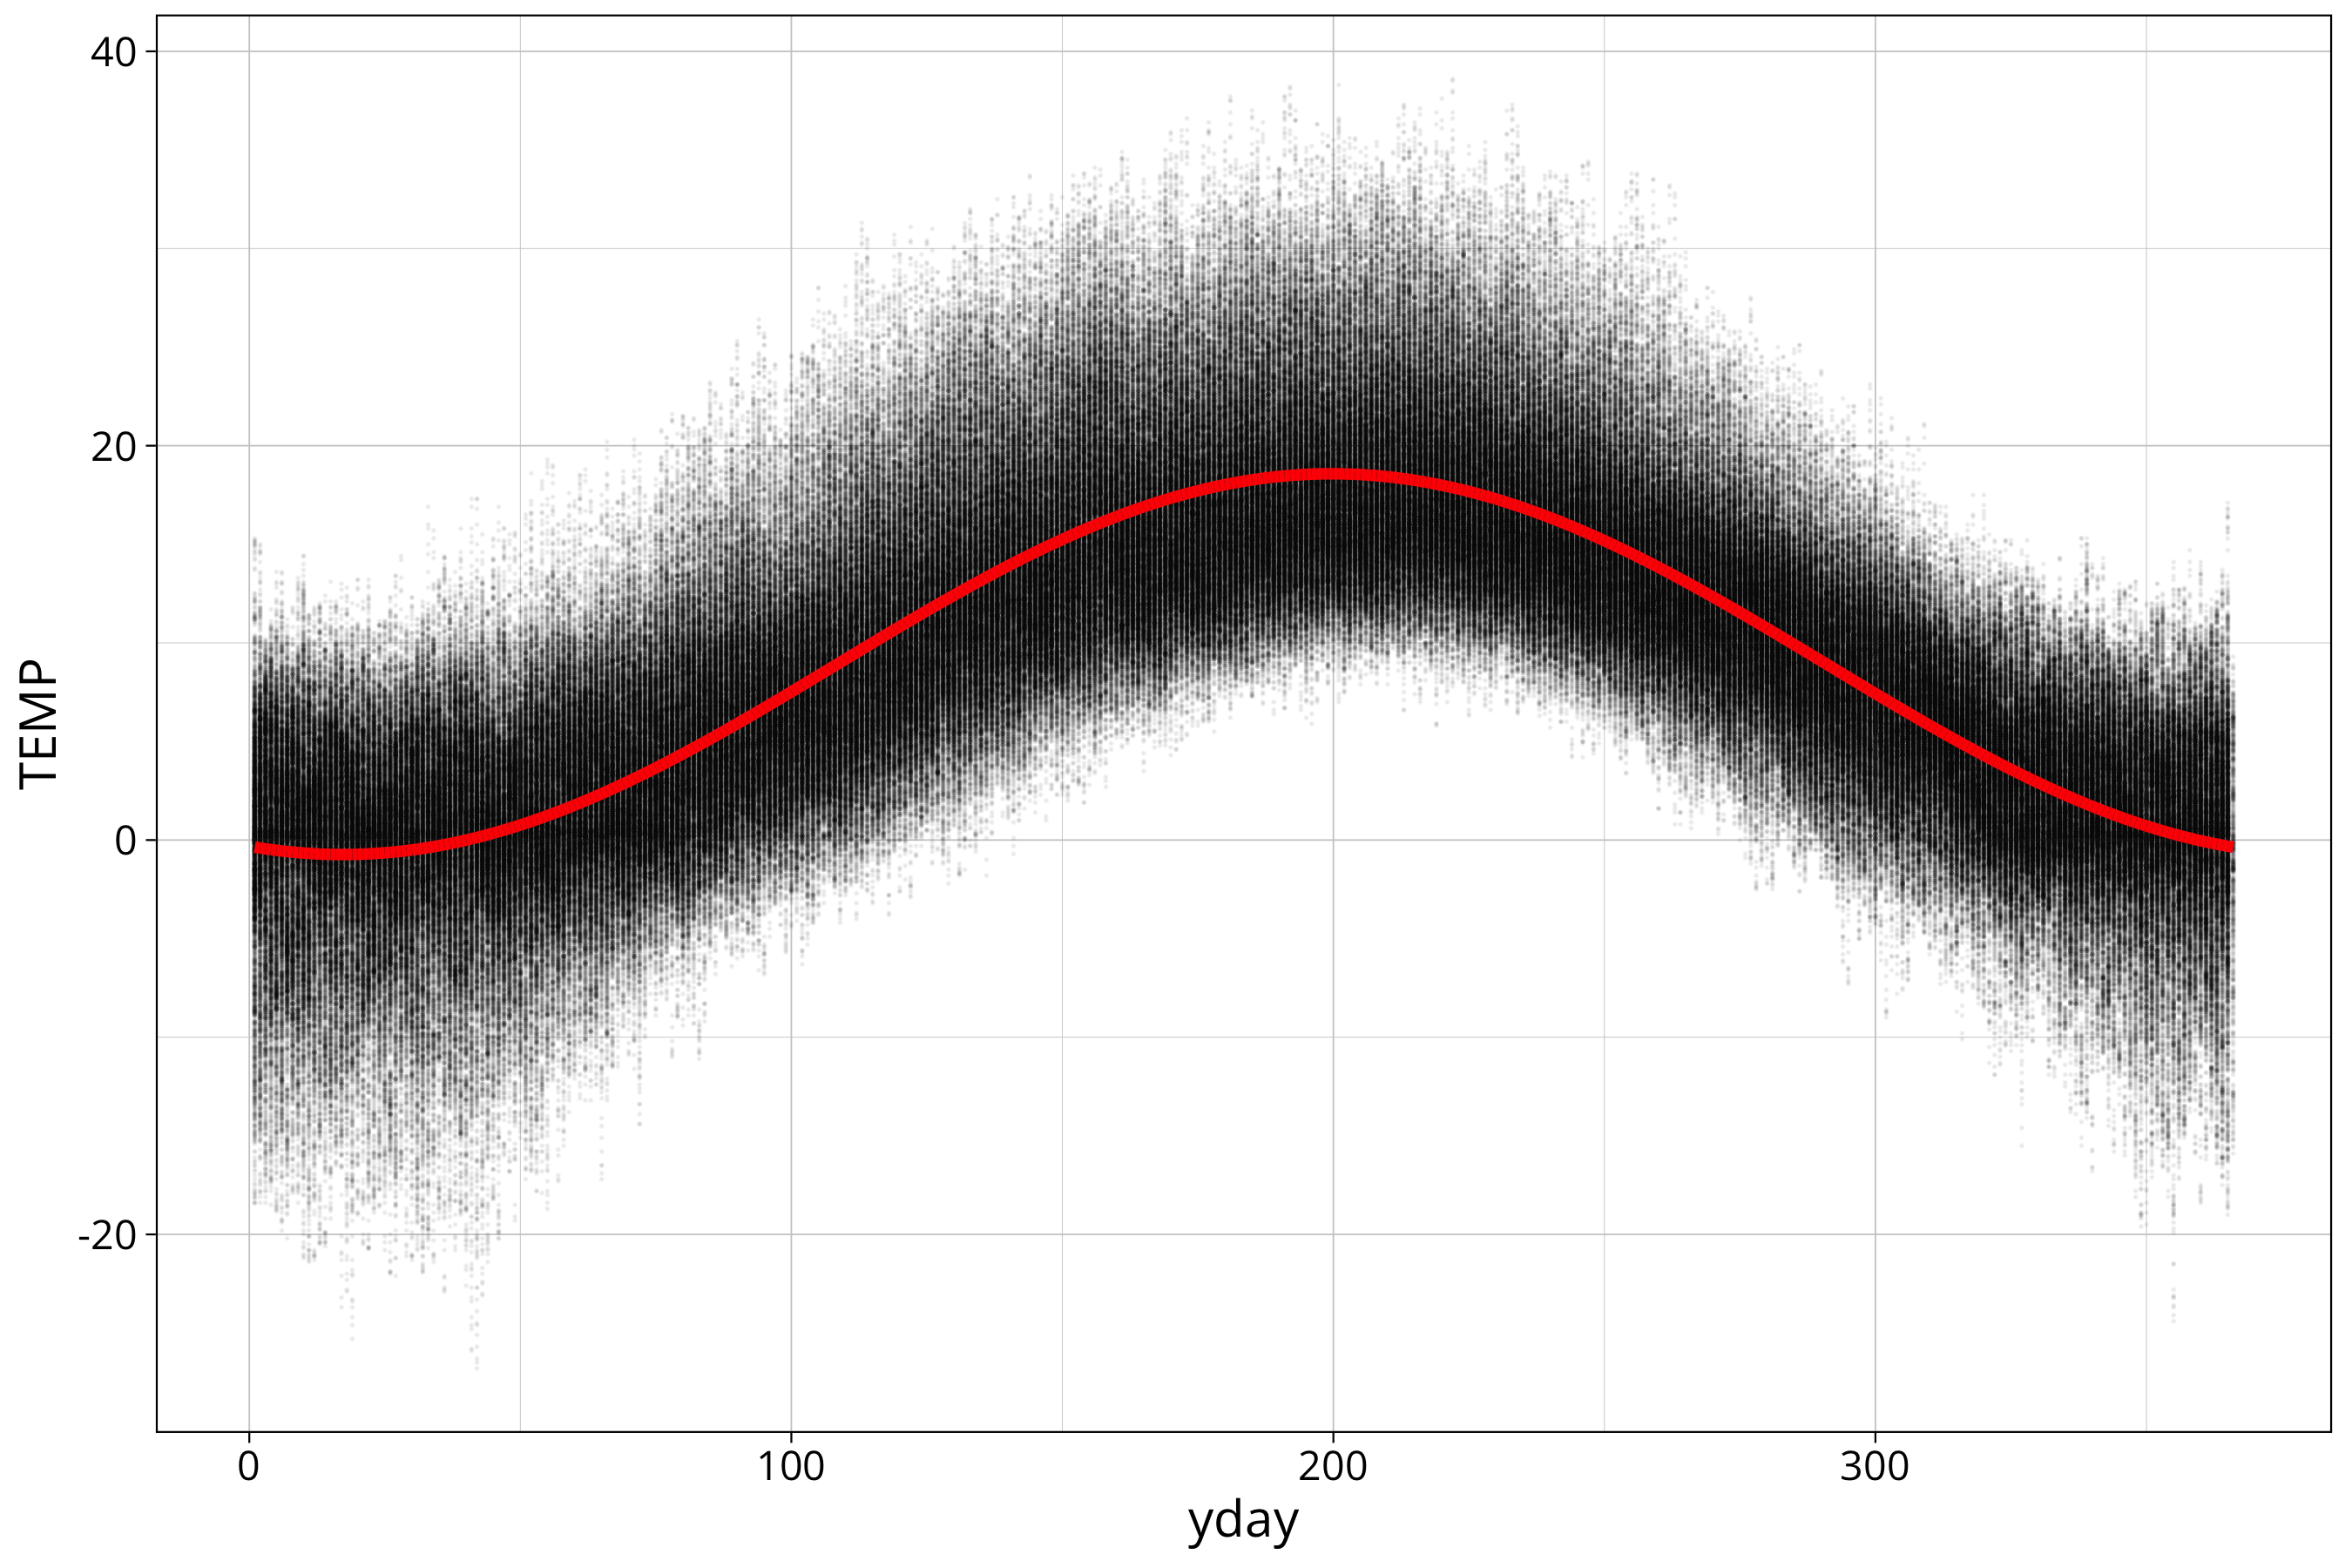 plot of chunk temp sin model with data